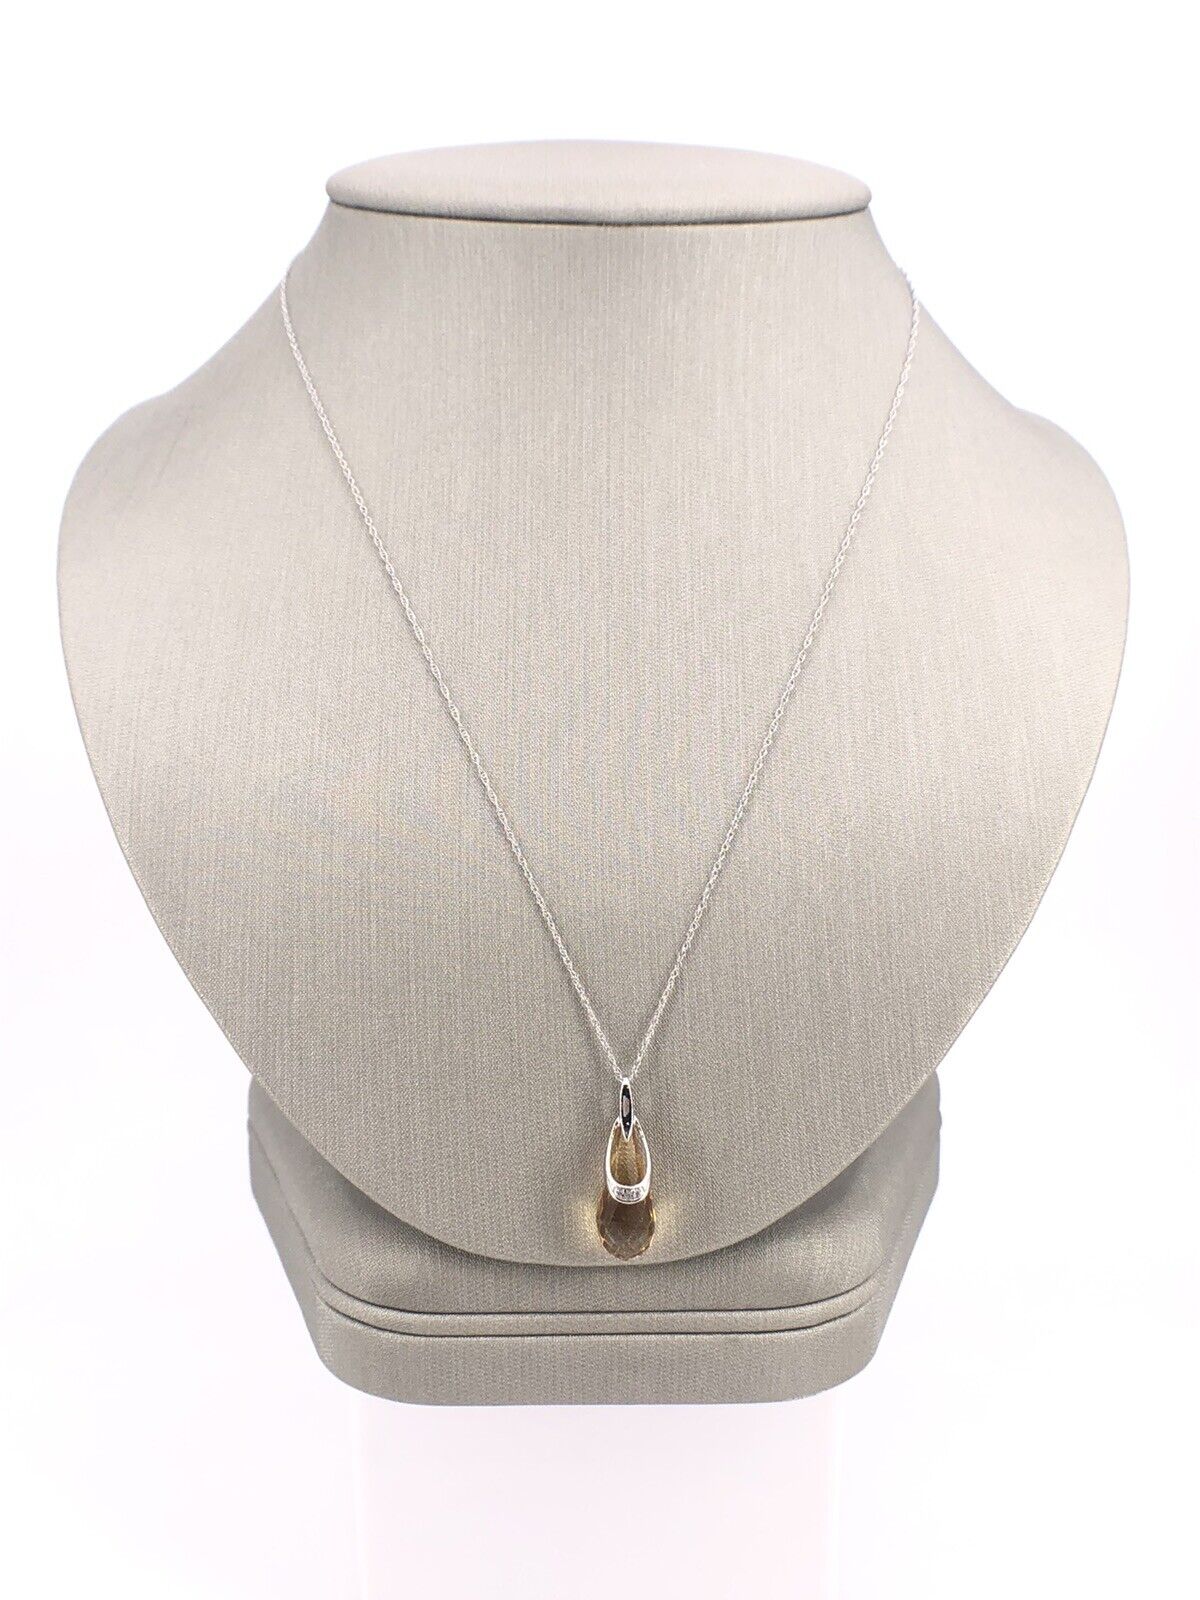 Chic, Solid 14k White Gold, Citrine & Diamond pendant Necklace, New, 18"